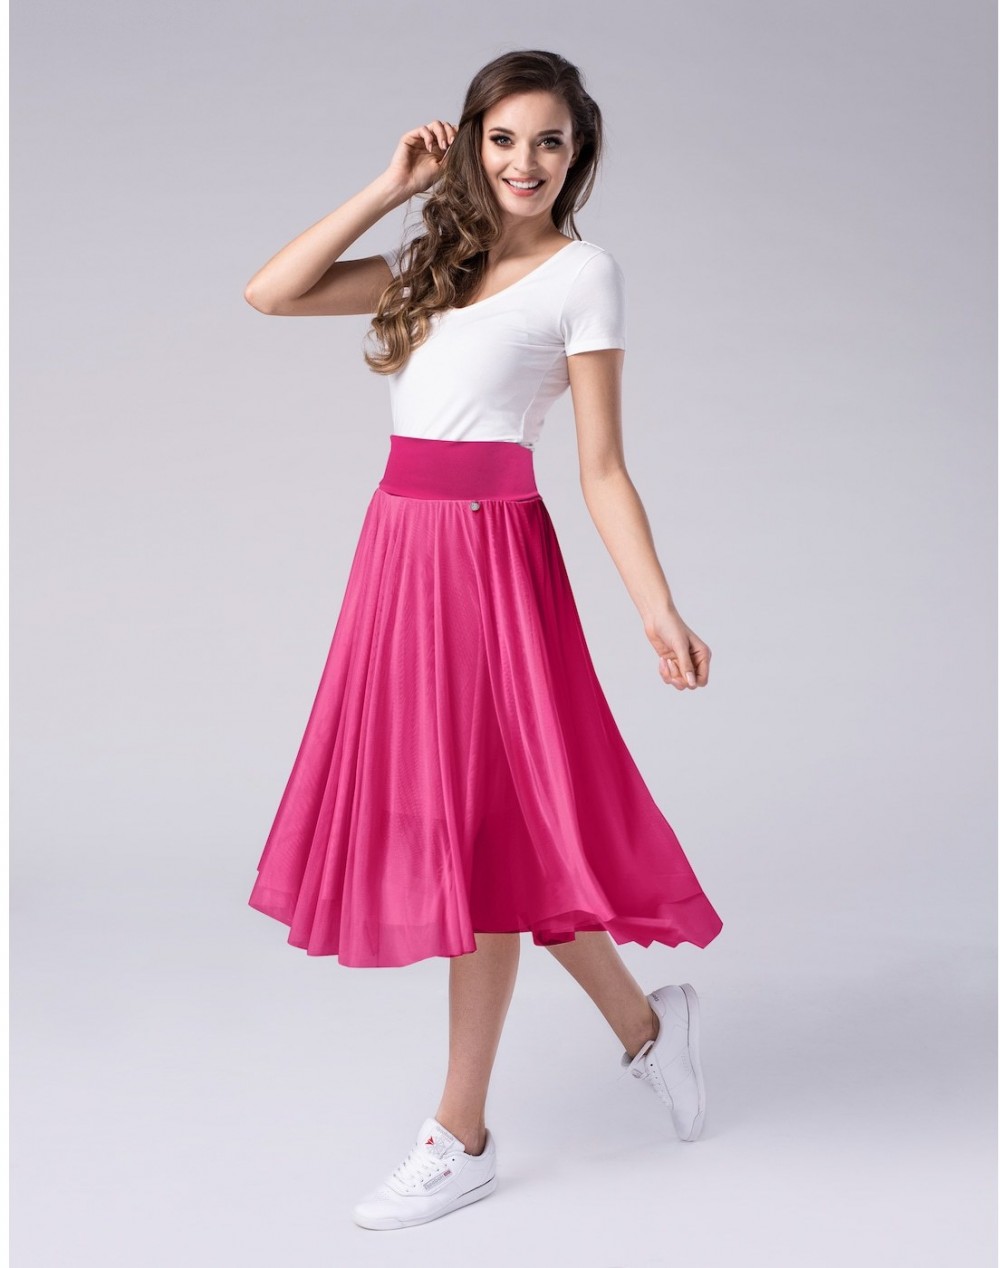 Look Made With Love Woman's Skirt 150 Tiulova